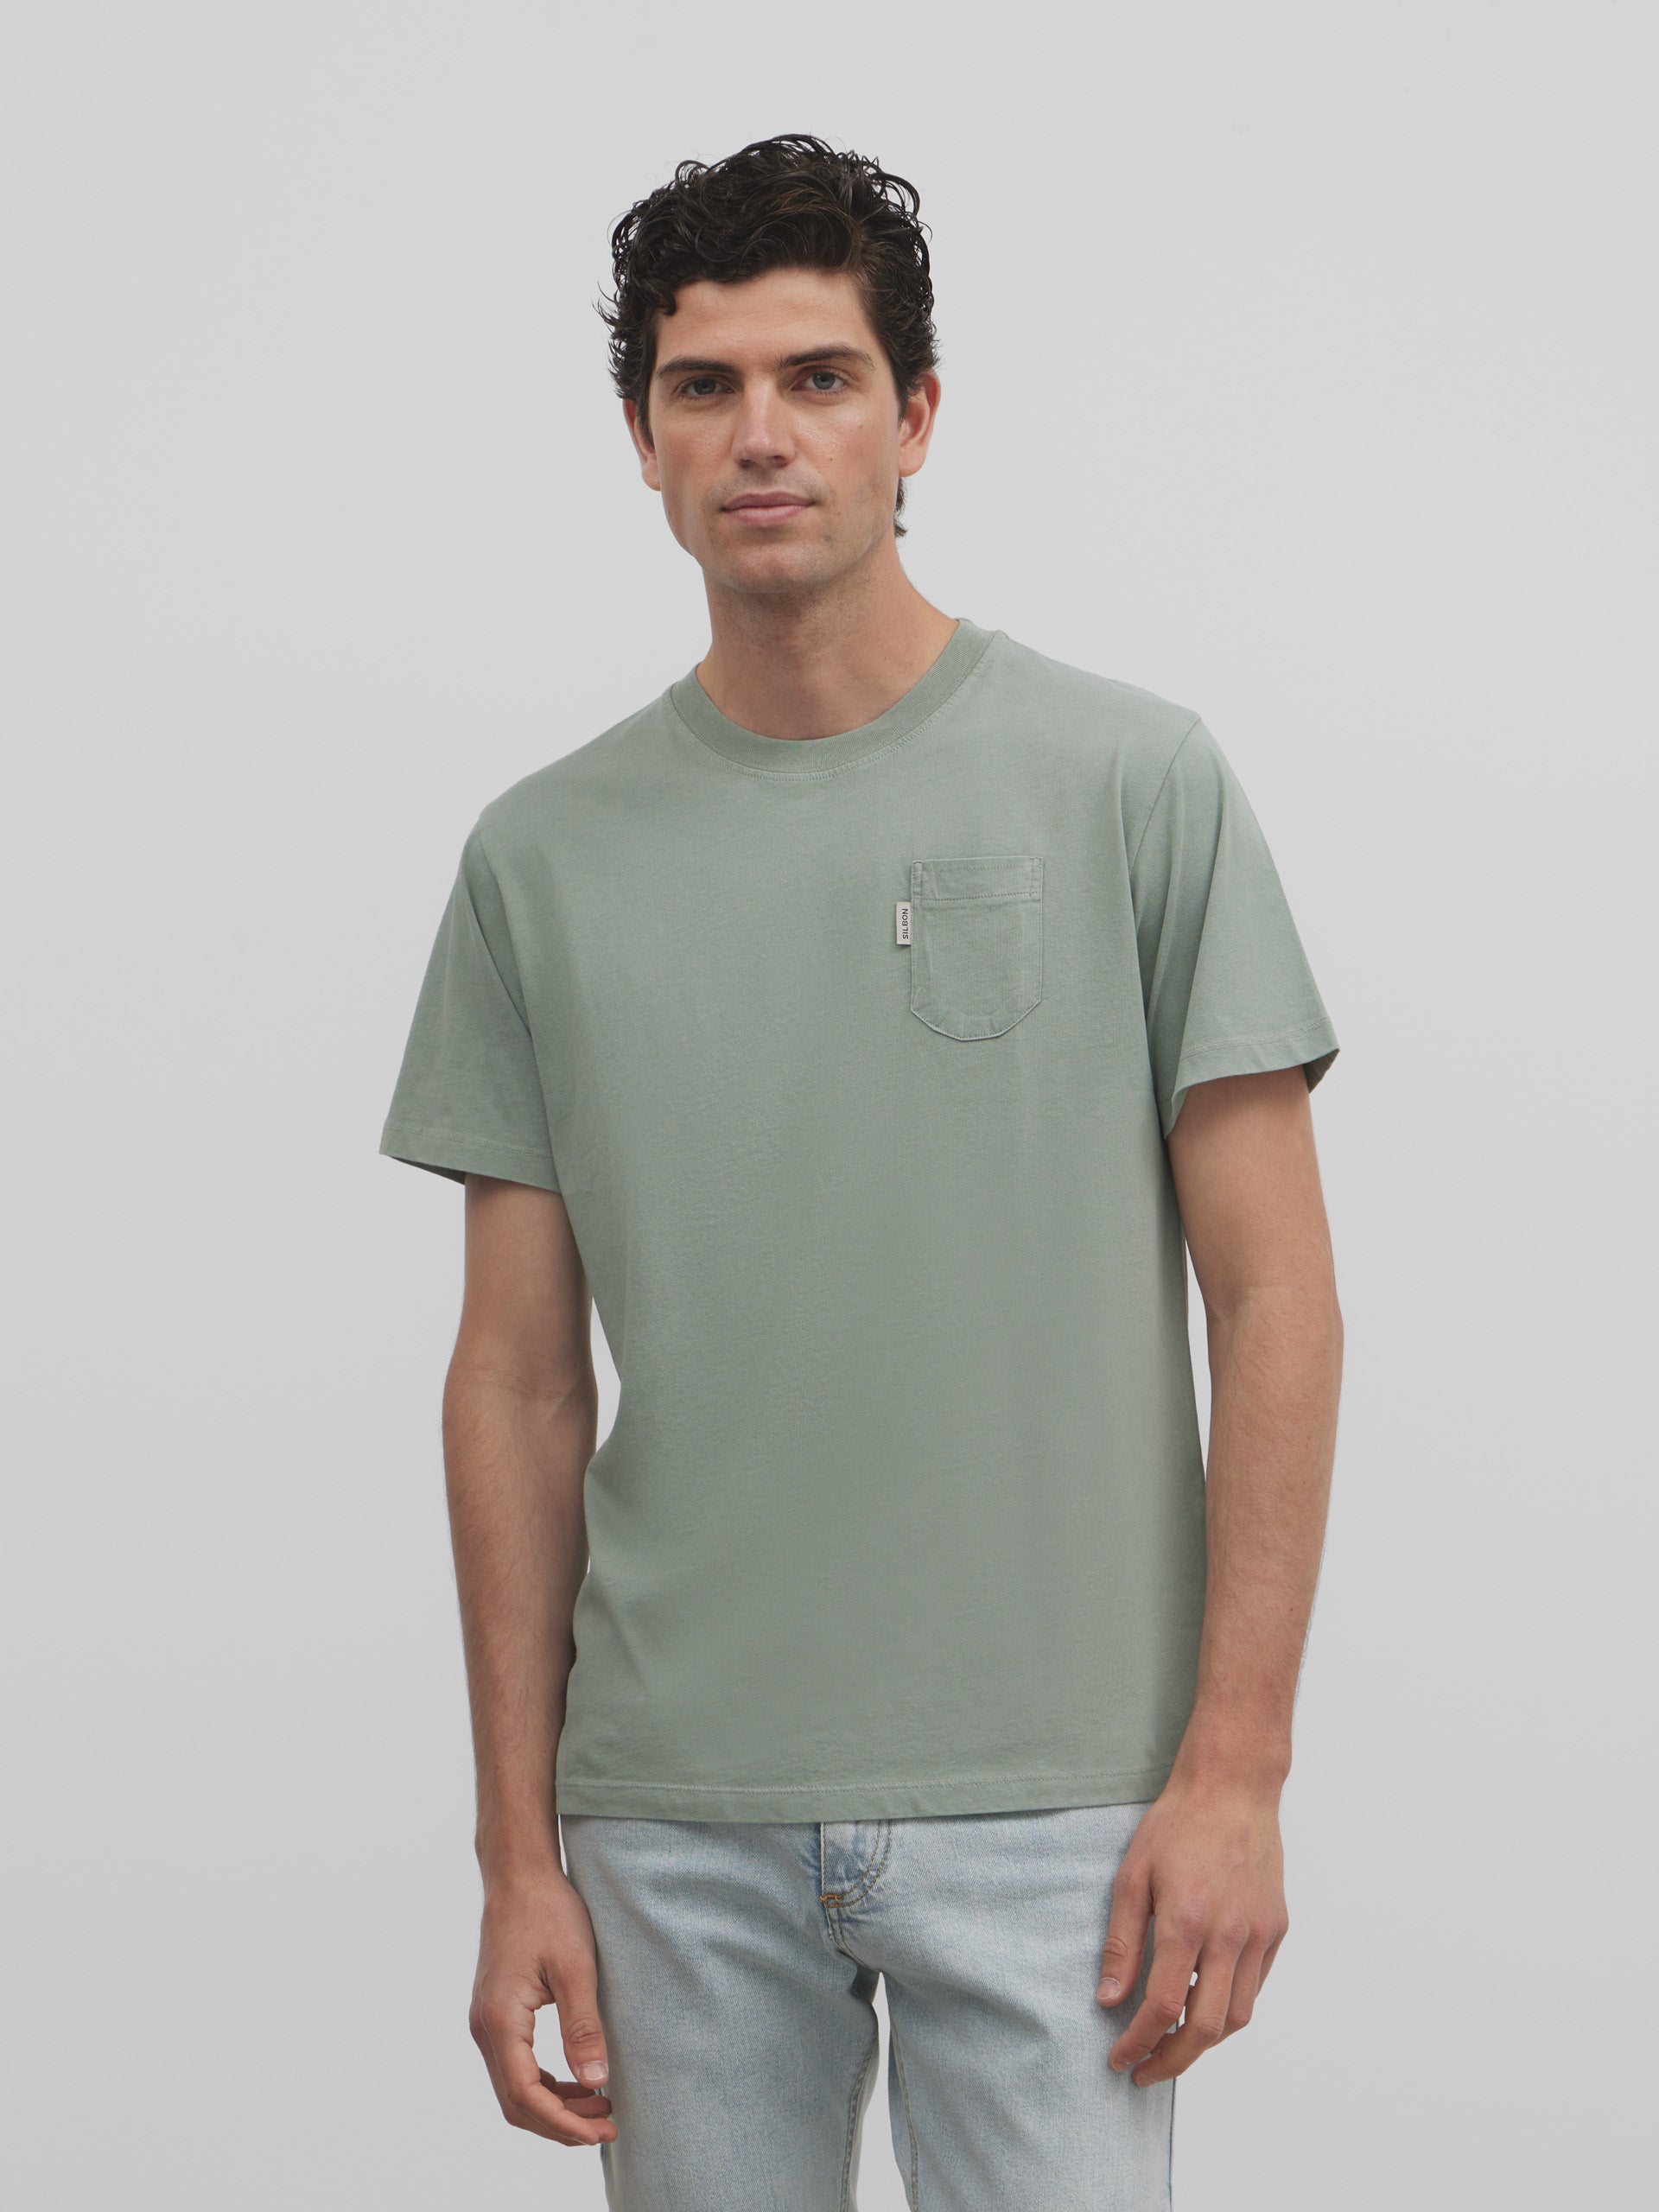 Silbon T-shirt with green pocket